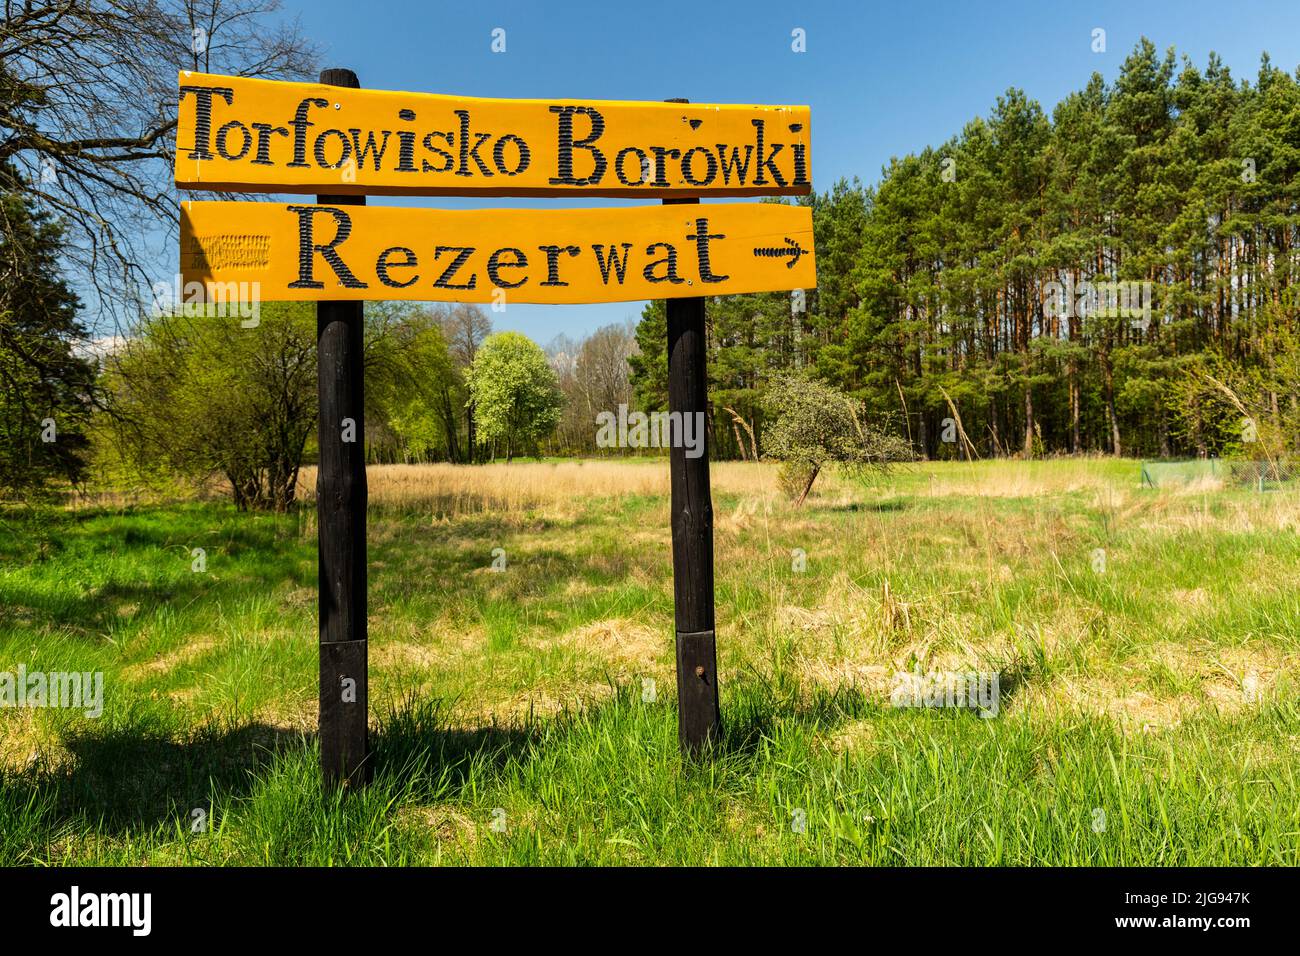 Europe, Poland, Lower Silesia, Przemkow Landscape Park - Torfowisko Borowki Stock Photo